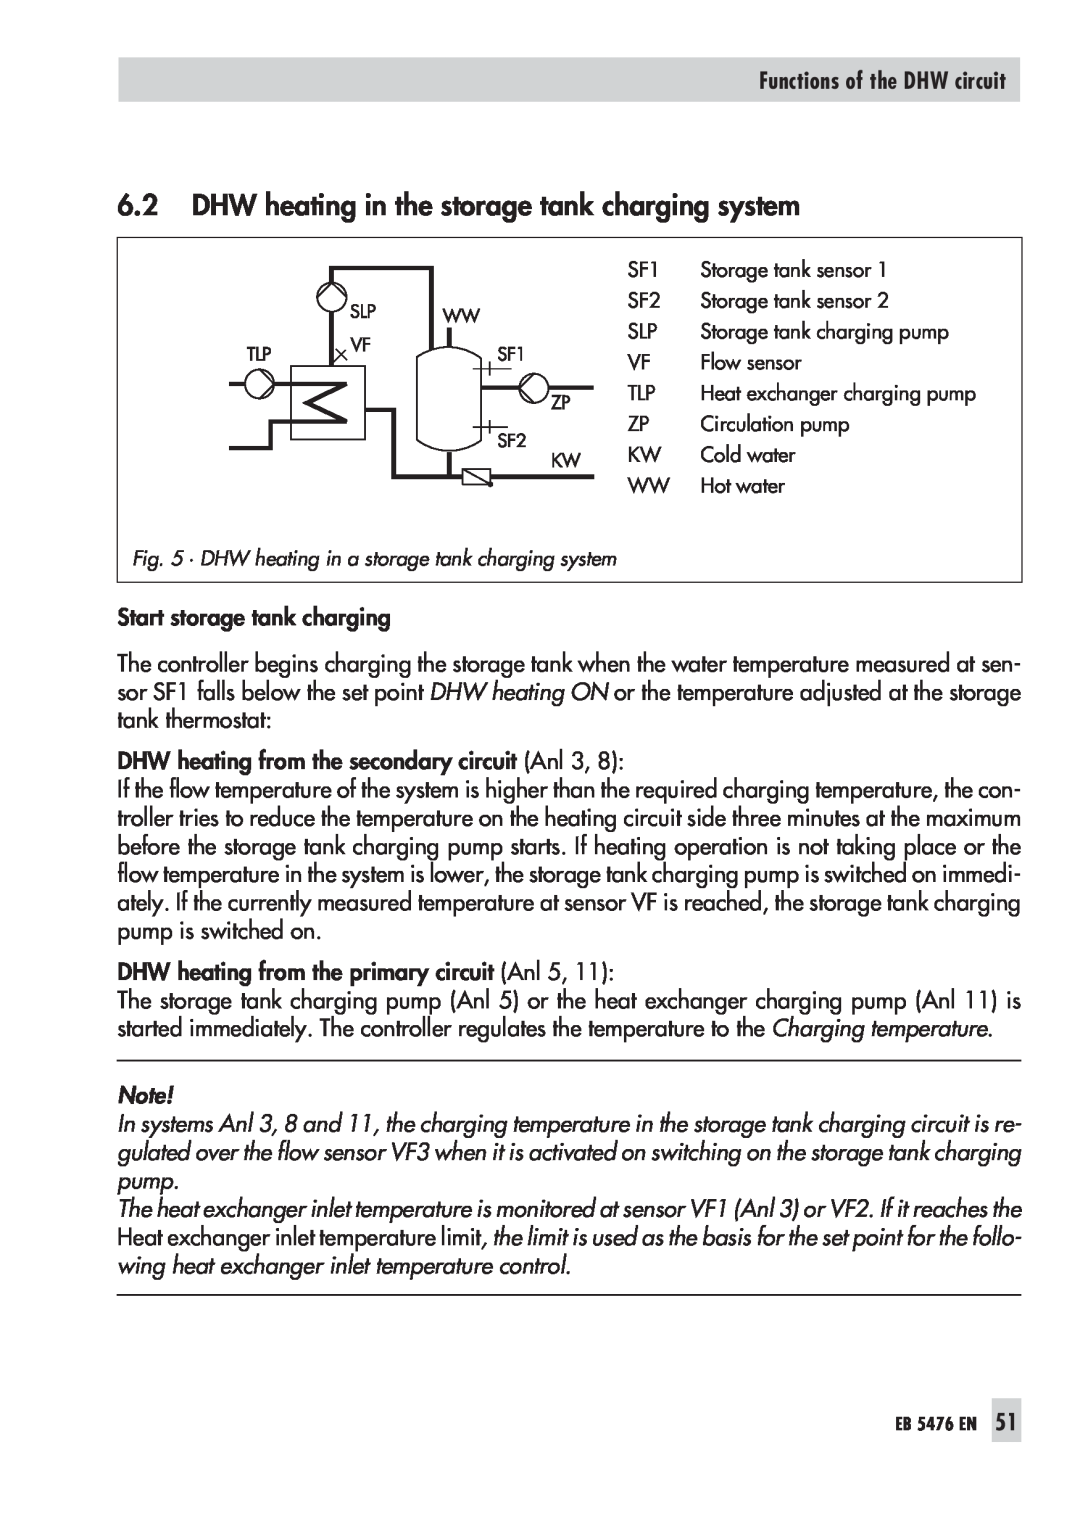 Samson 5476 manual Functions of the DHW circuit, Start storage tank charging 